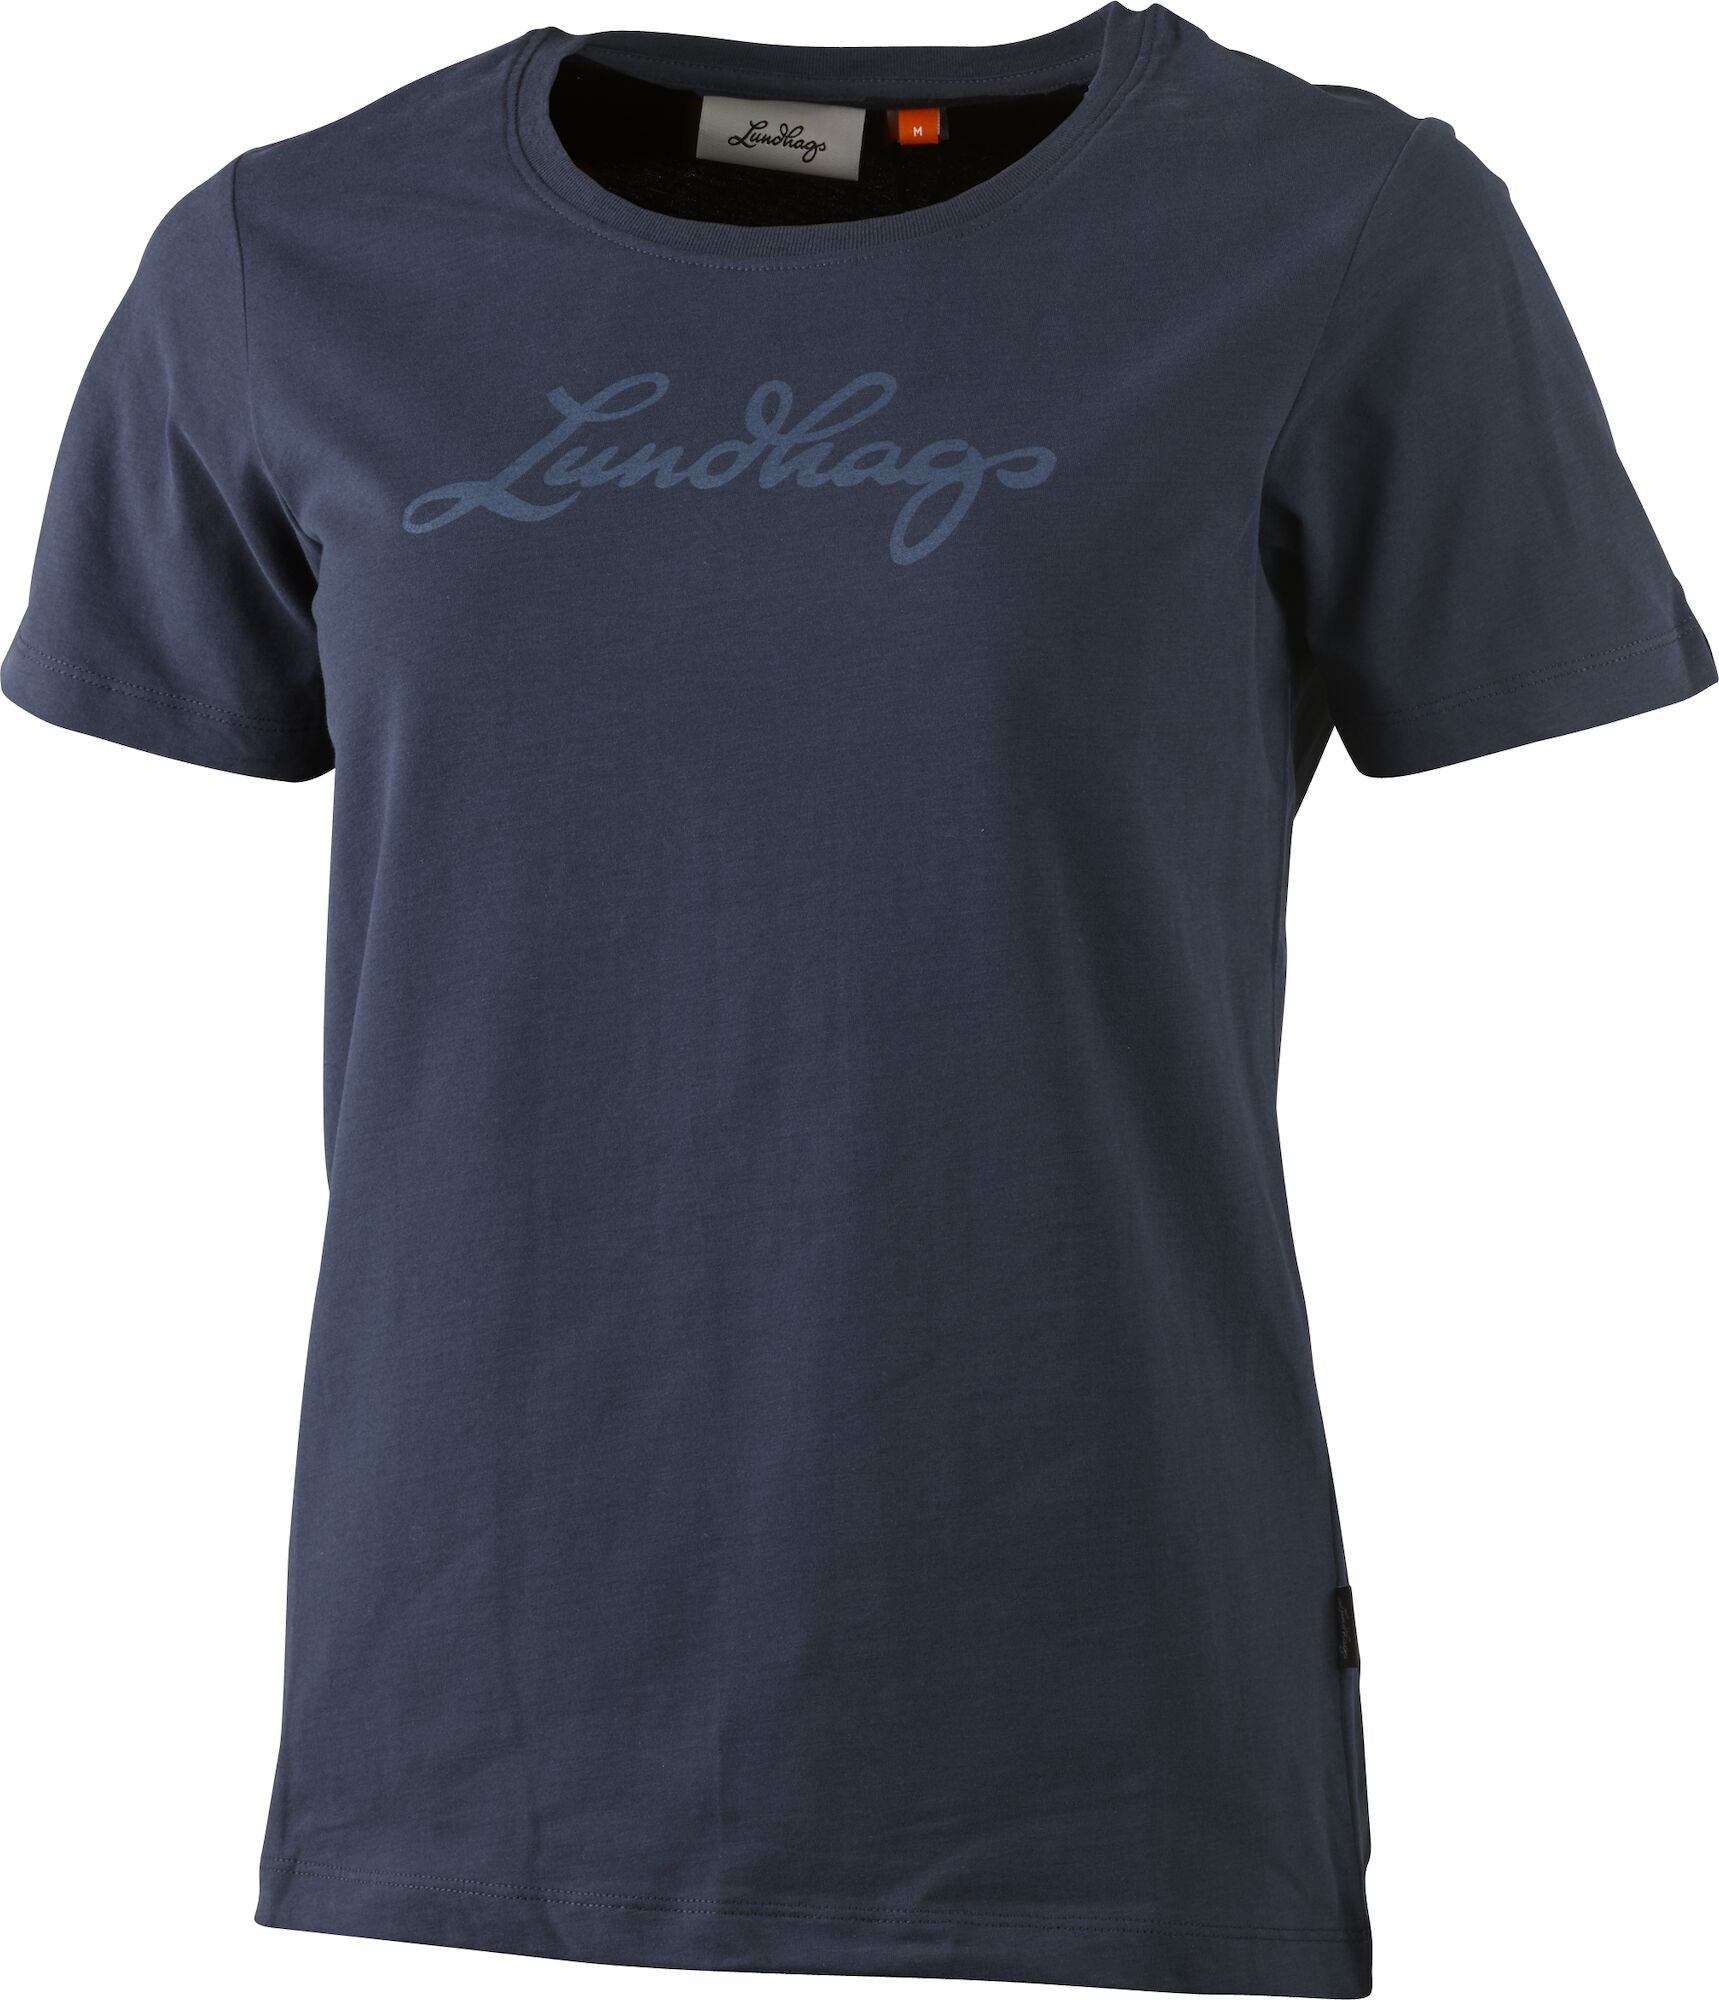 Lundhags t-shirt Dam